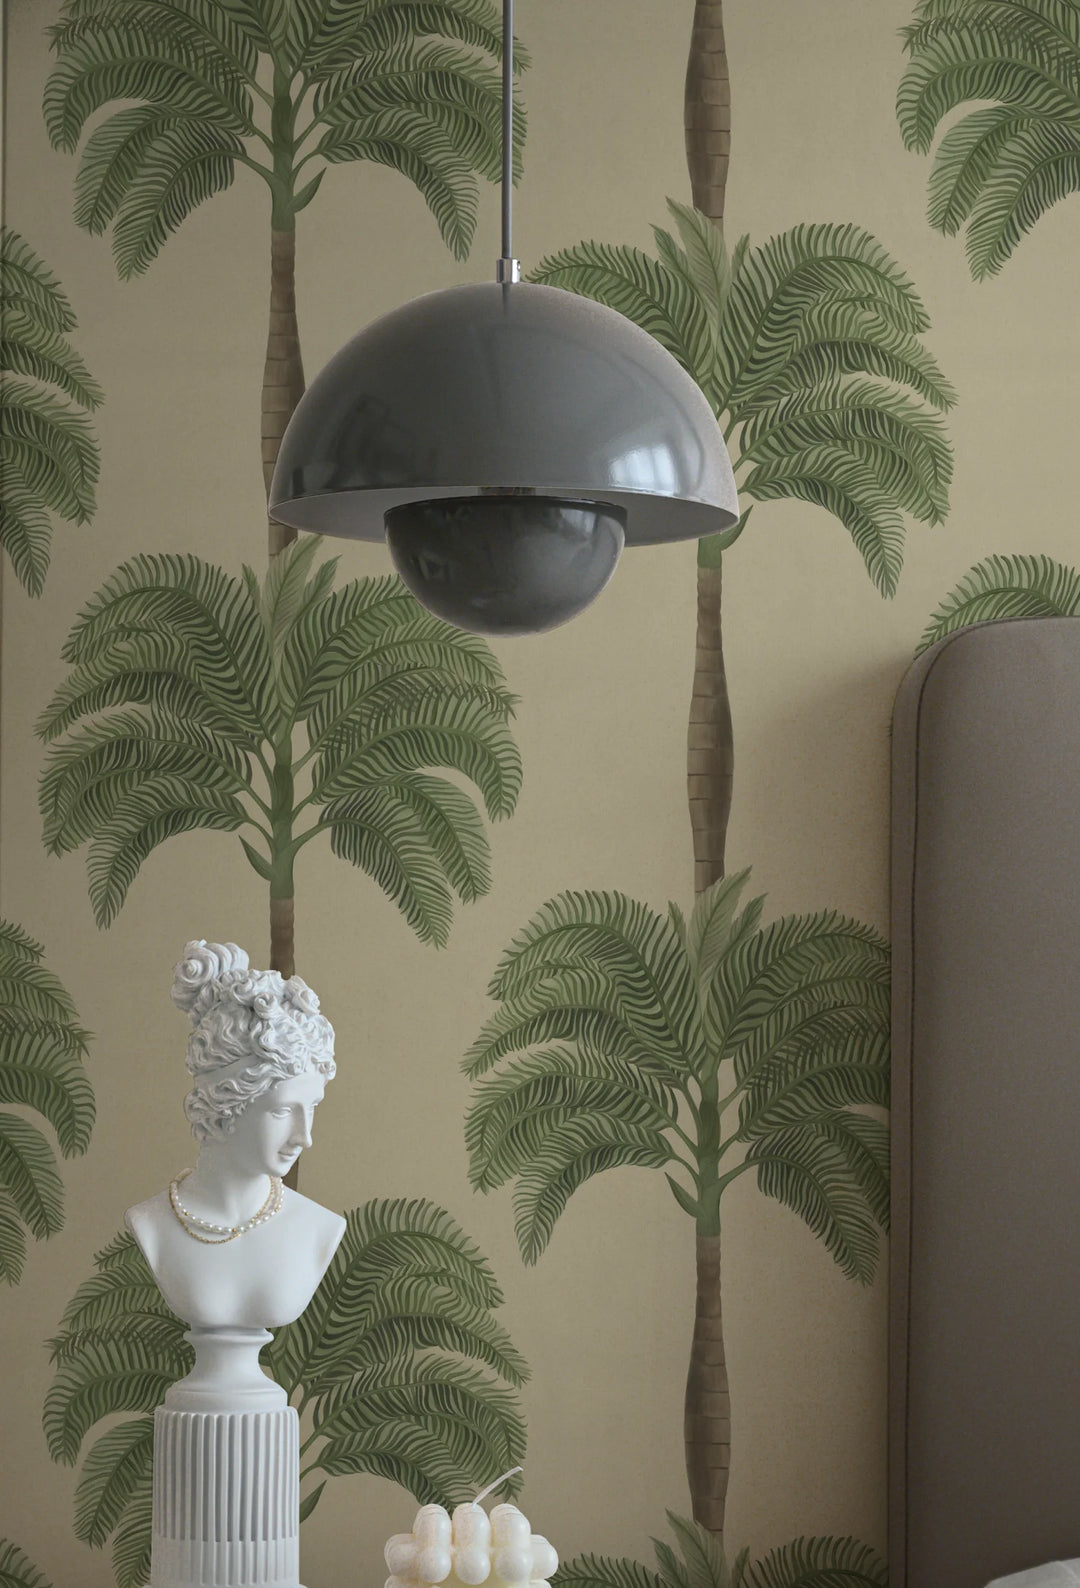 Deus-ex-gardenia-Palma-wallpaper-Palm-tree-repeat-lush-tropical-stripe-sand-palm-tree-beige-background-hand-illustrated-wallpaper-pattern